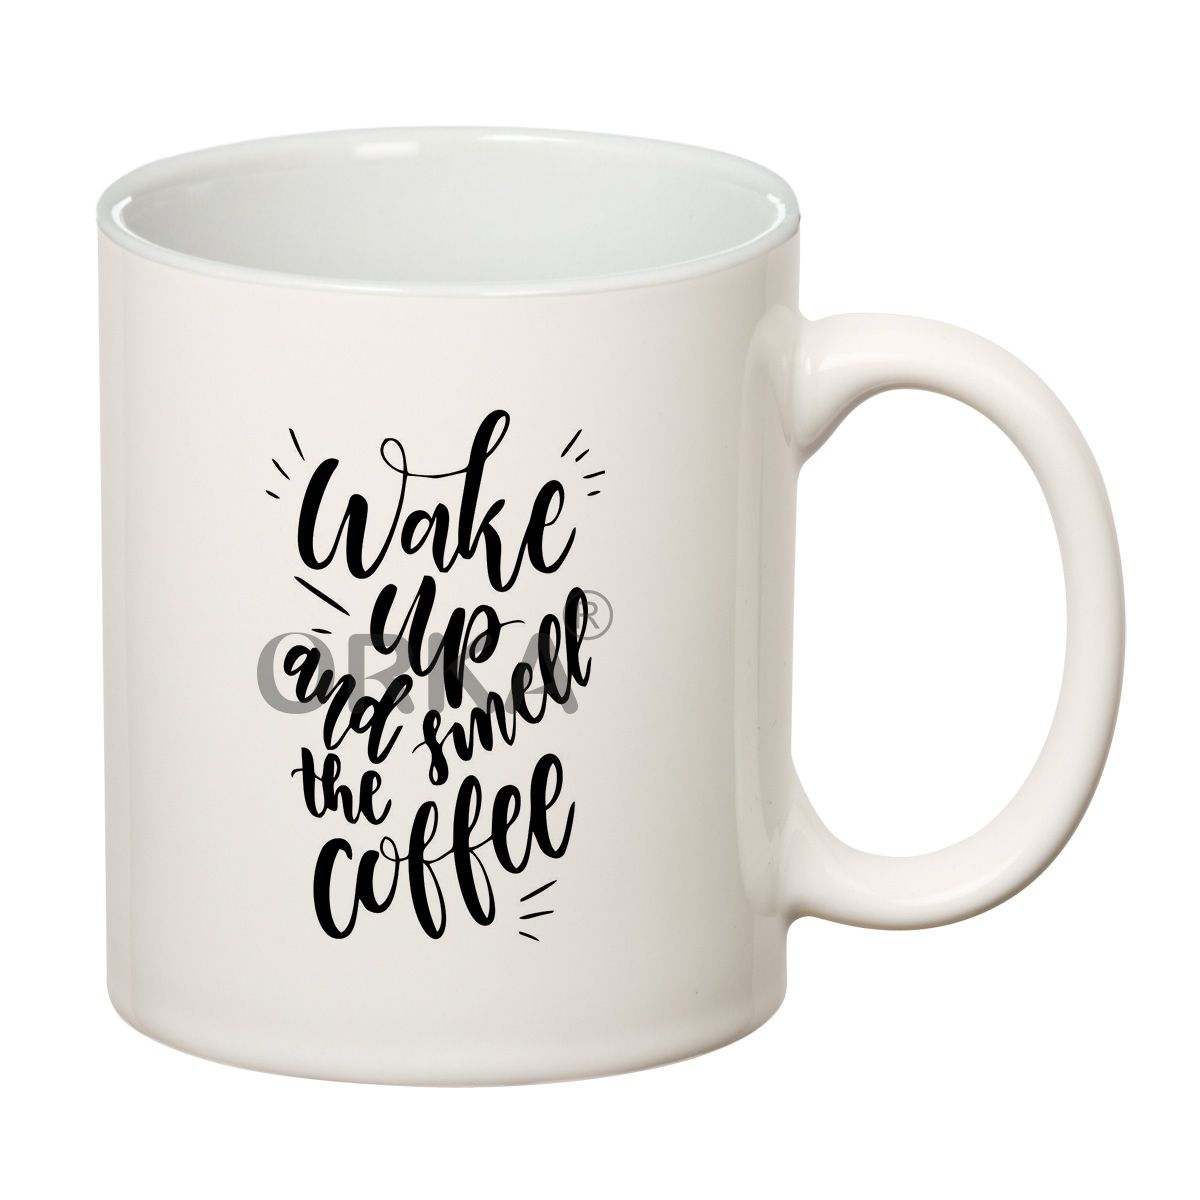 ORKA Coffee Mug Quotes Printed(Wake Up And Smell The Coffee) Theme 11 Oz   